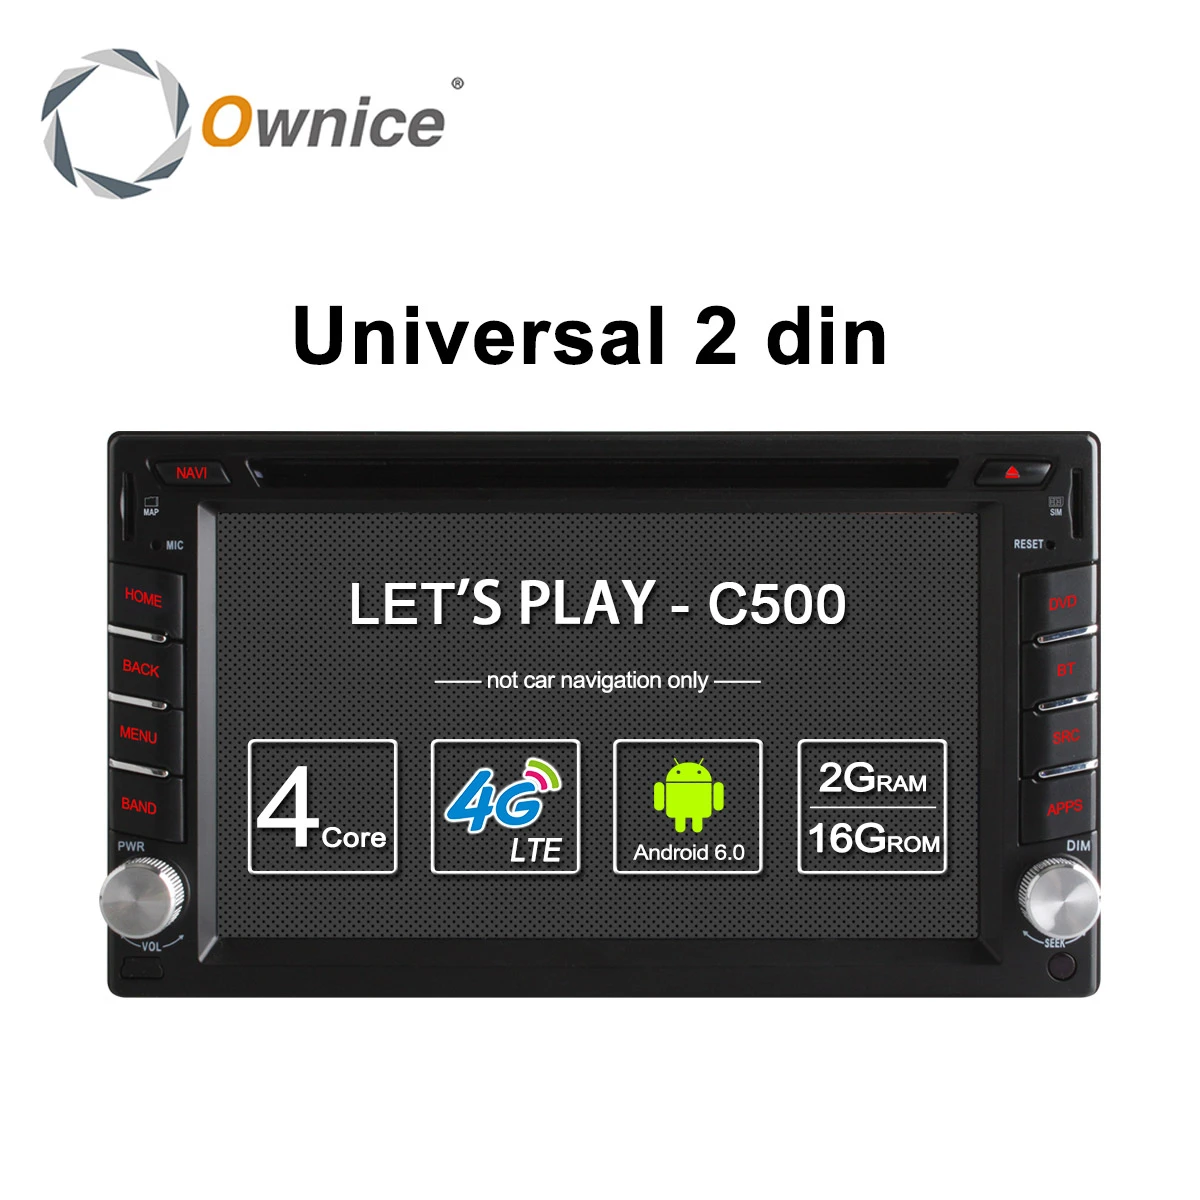 Ownice C500 Universal 2 din Android 6.0 Octa 8 Core Car DVD player GPS Wifi BT Radio BT 2GB RAM 32GB ROM 4G SIM LTE Network blaupunkt car stereo